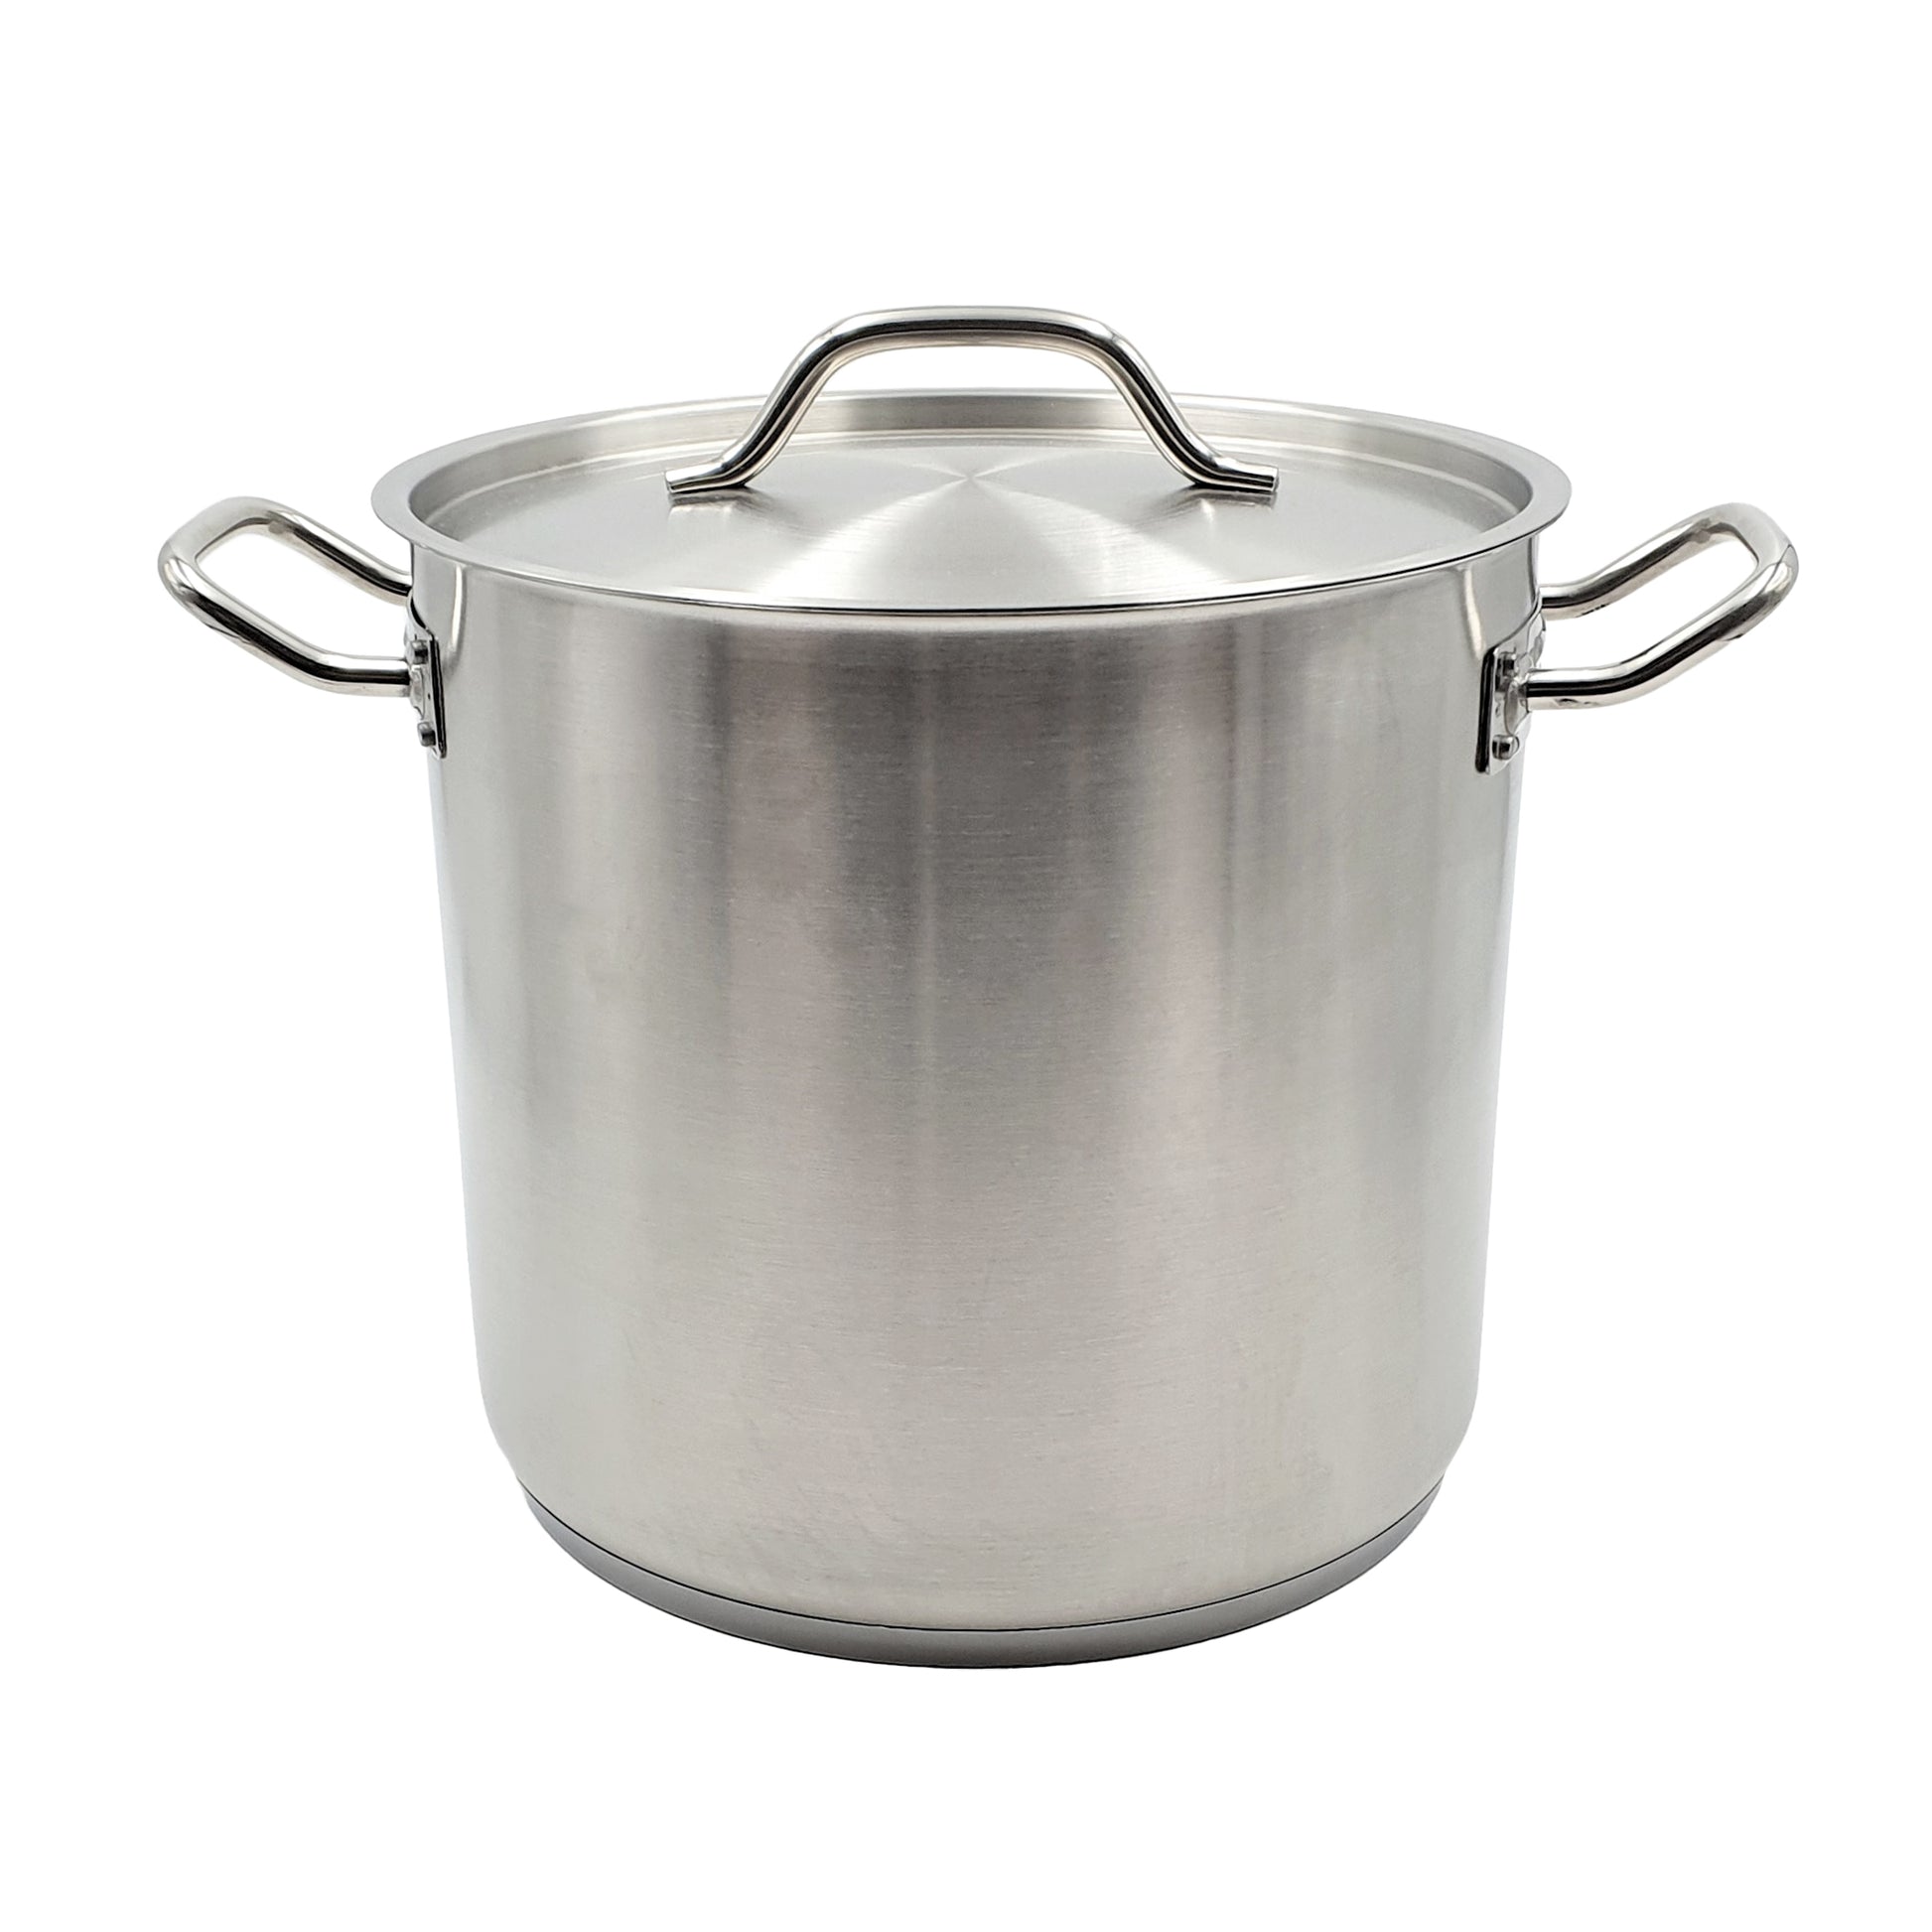 Italian Made 100 litre aluminium stock pot with lid used for making tomato passata sauce.